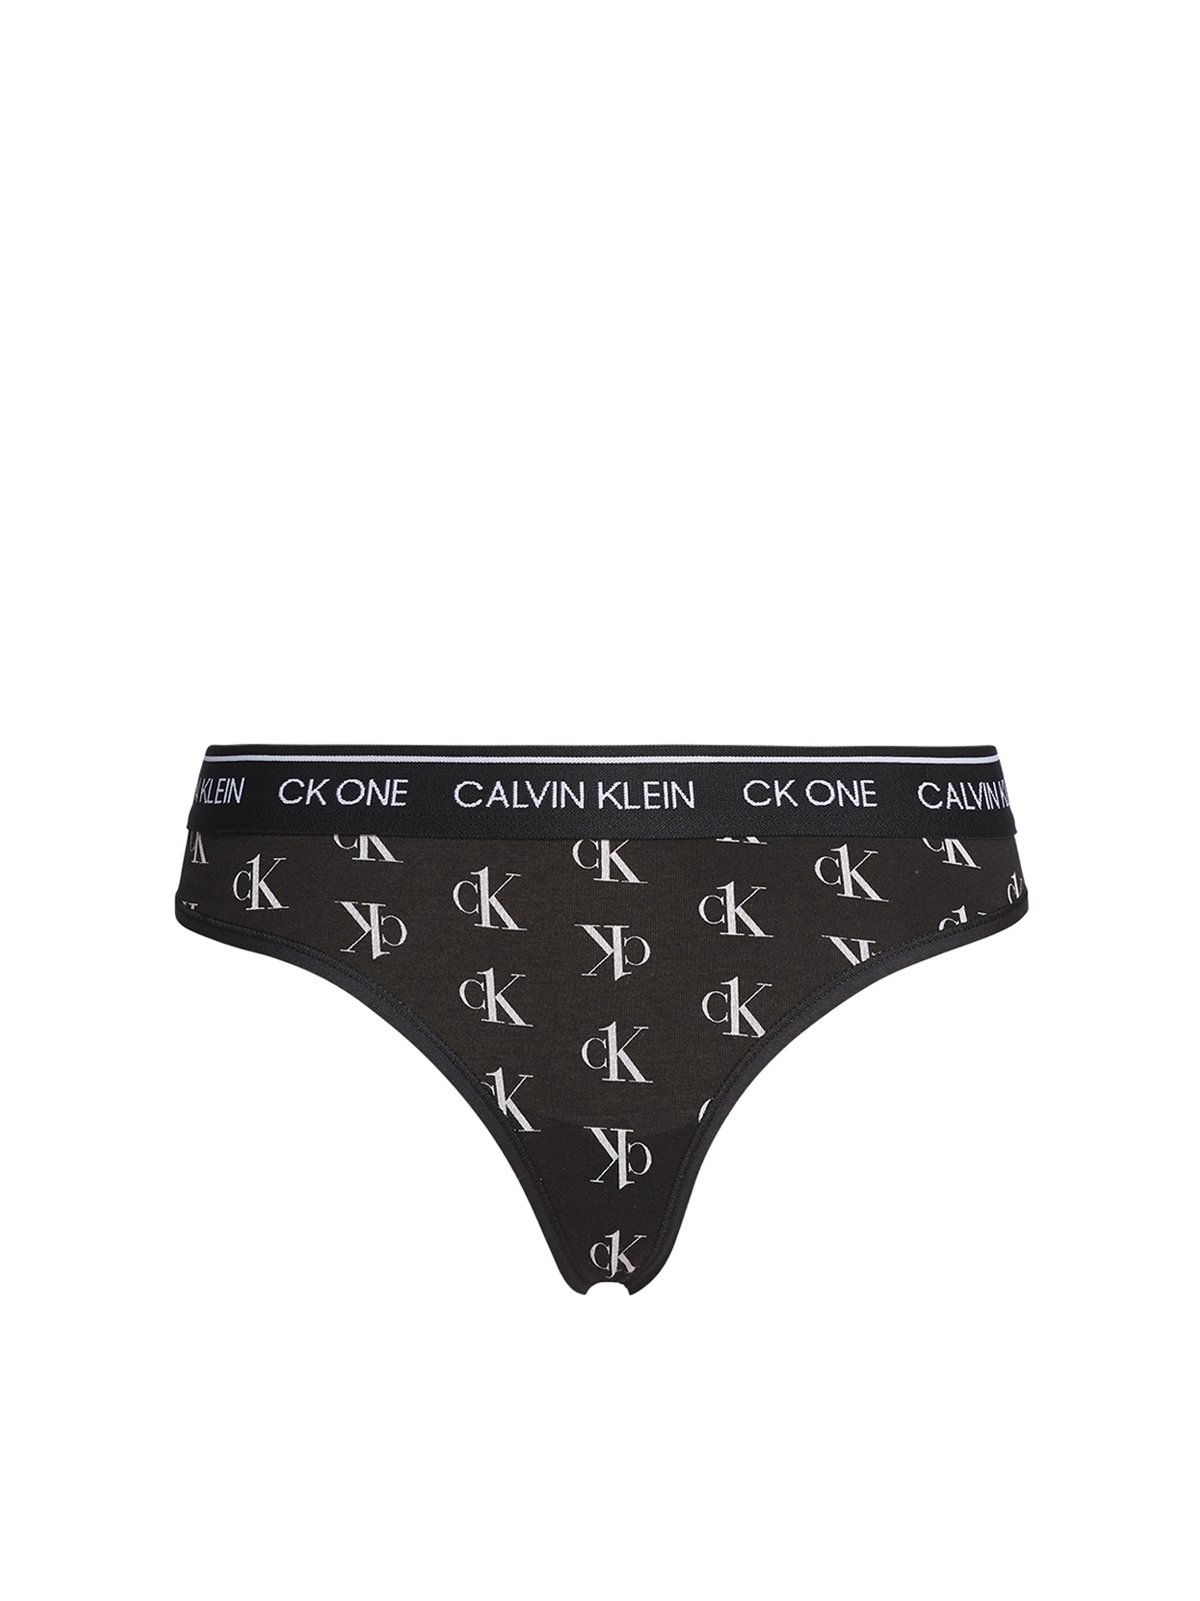 Women's panties Calvin Klein Underwear